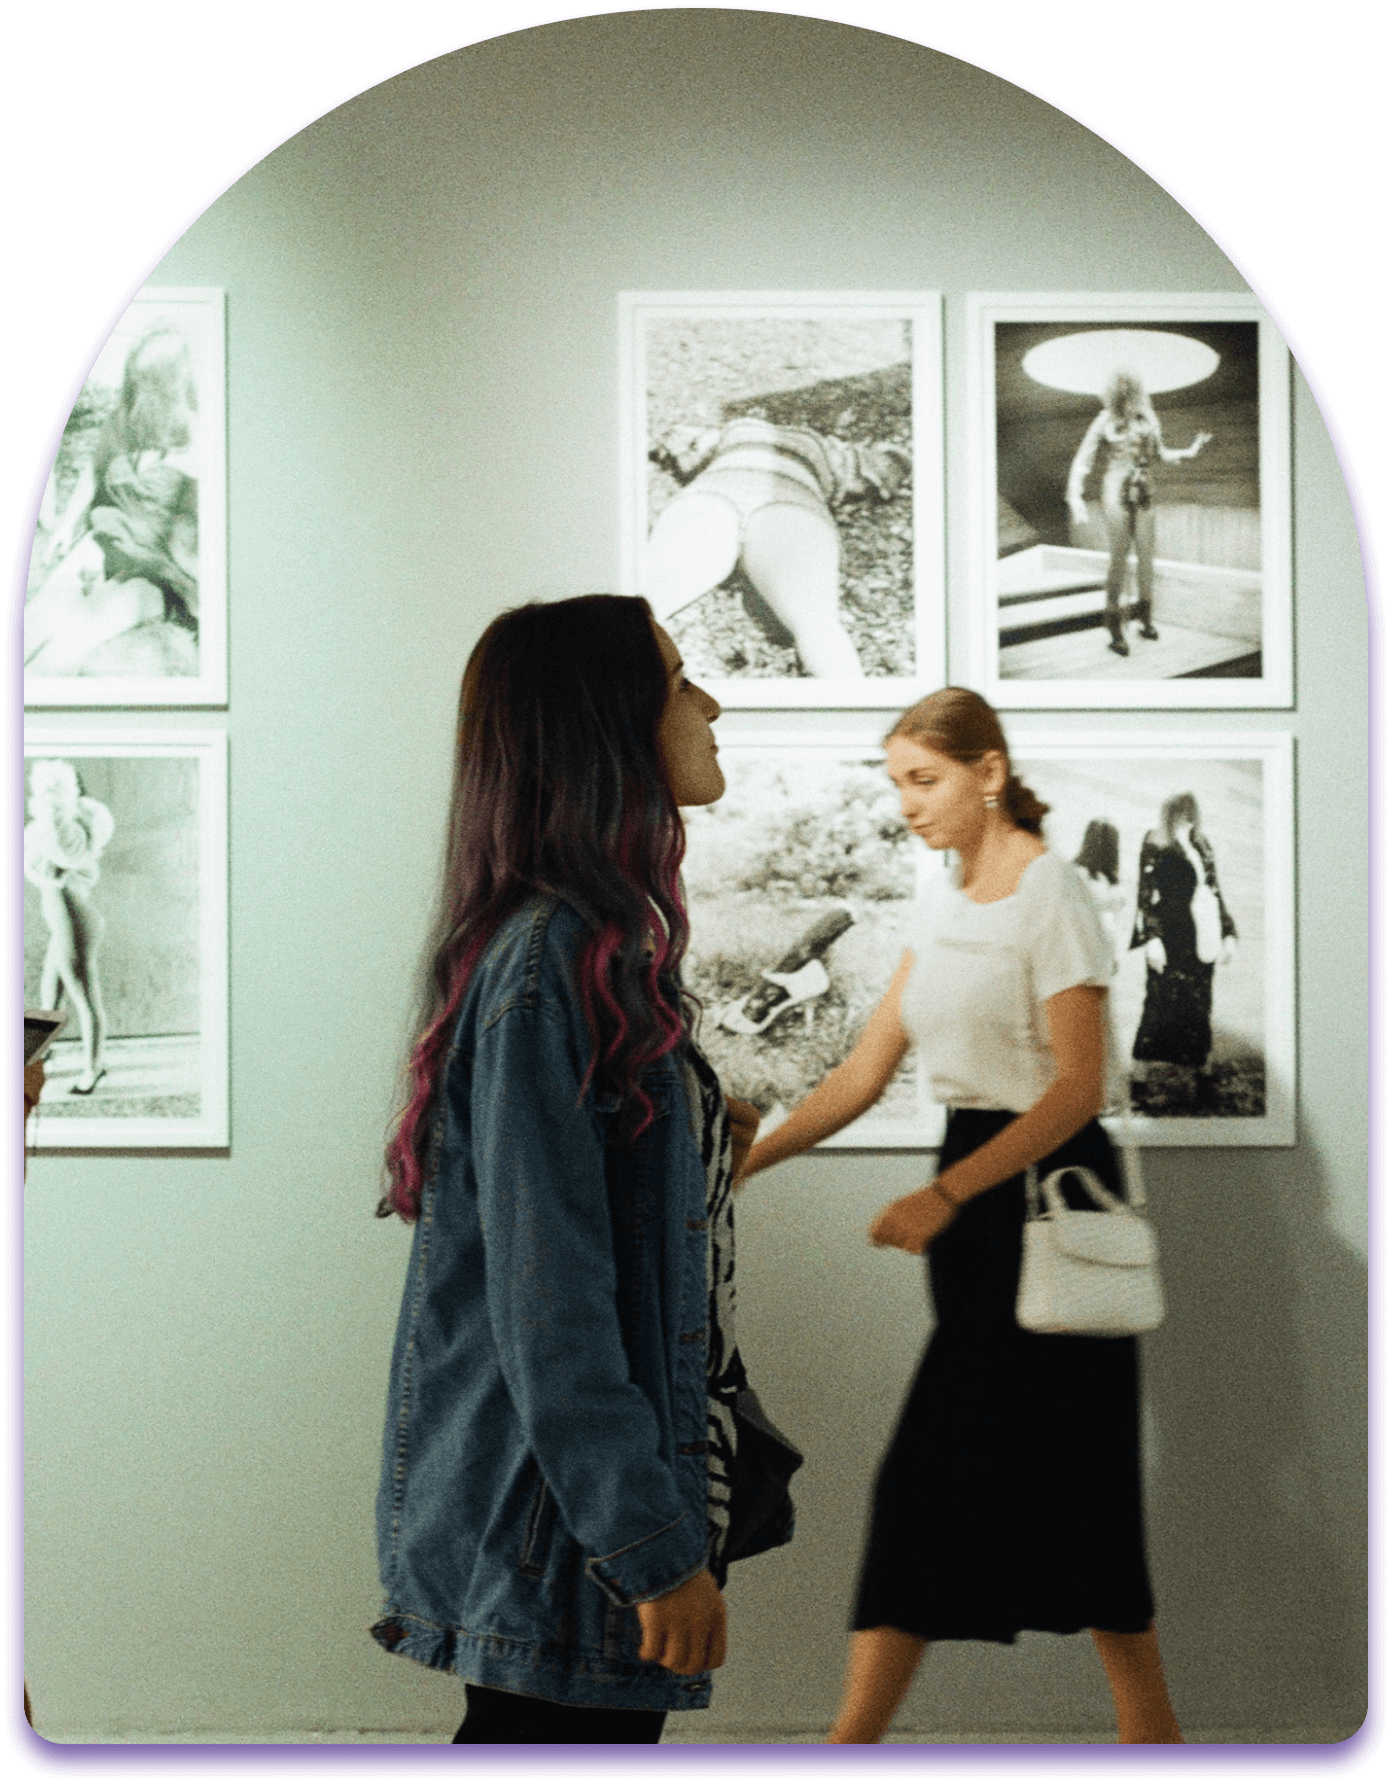 visitors of art show looking at artwork